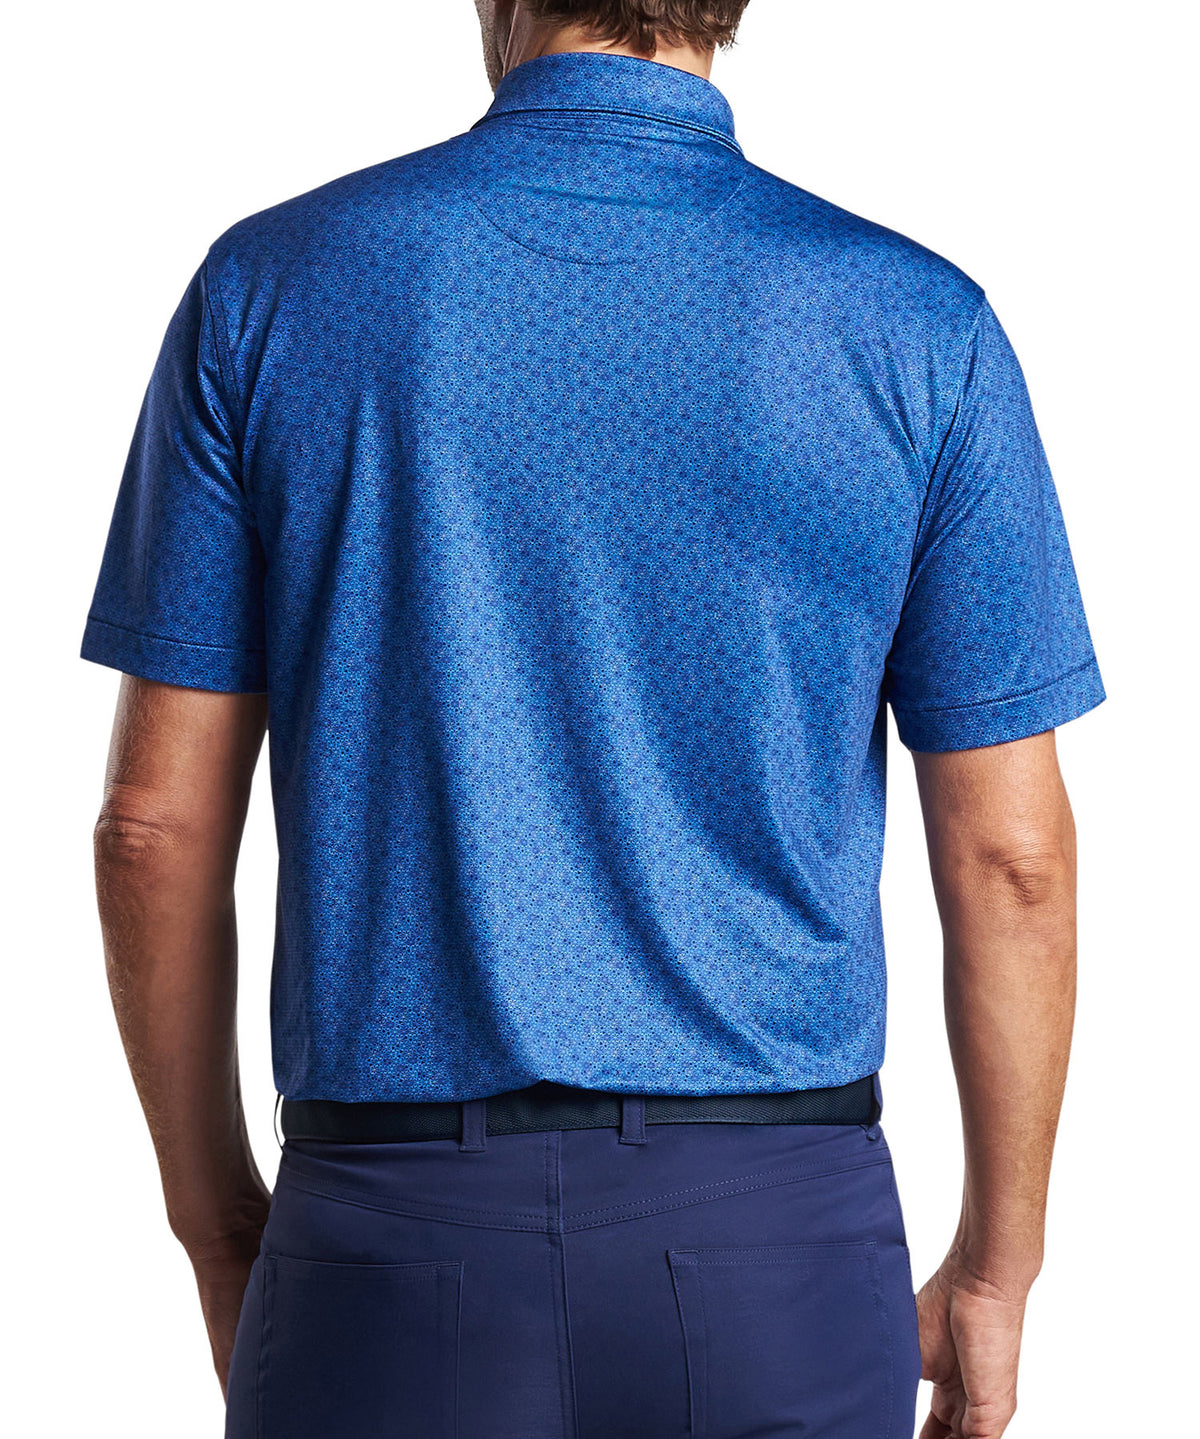 Peter Millar Short Sleeve Citrus Print Polo Knit Shirt, Men's Big & Tall